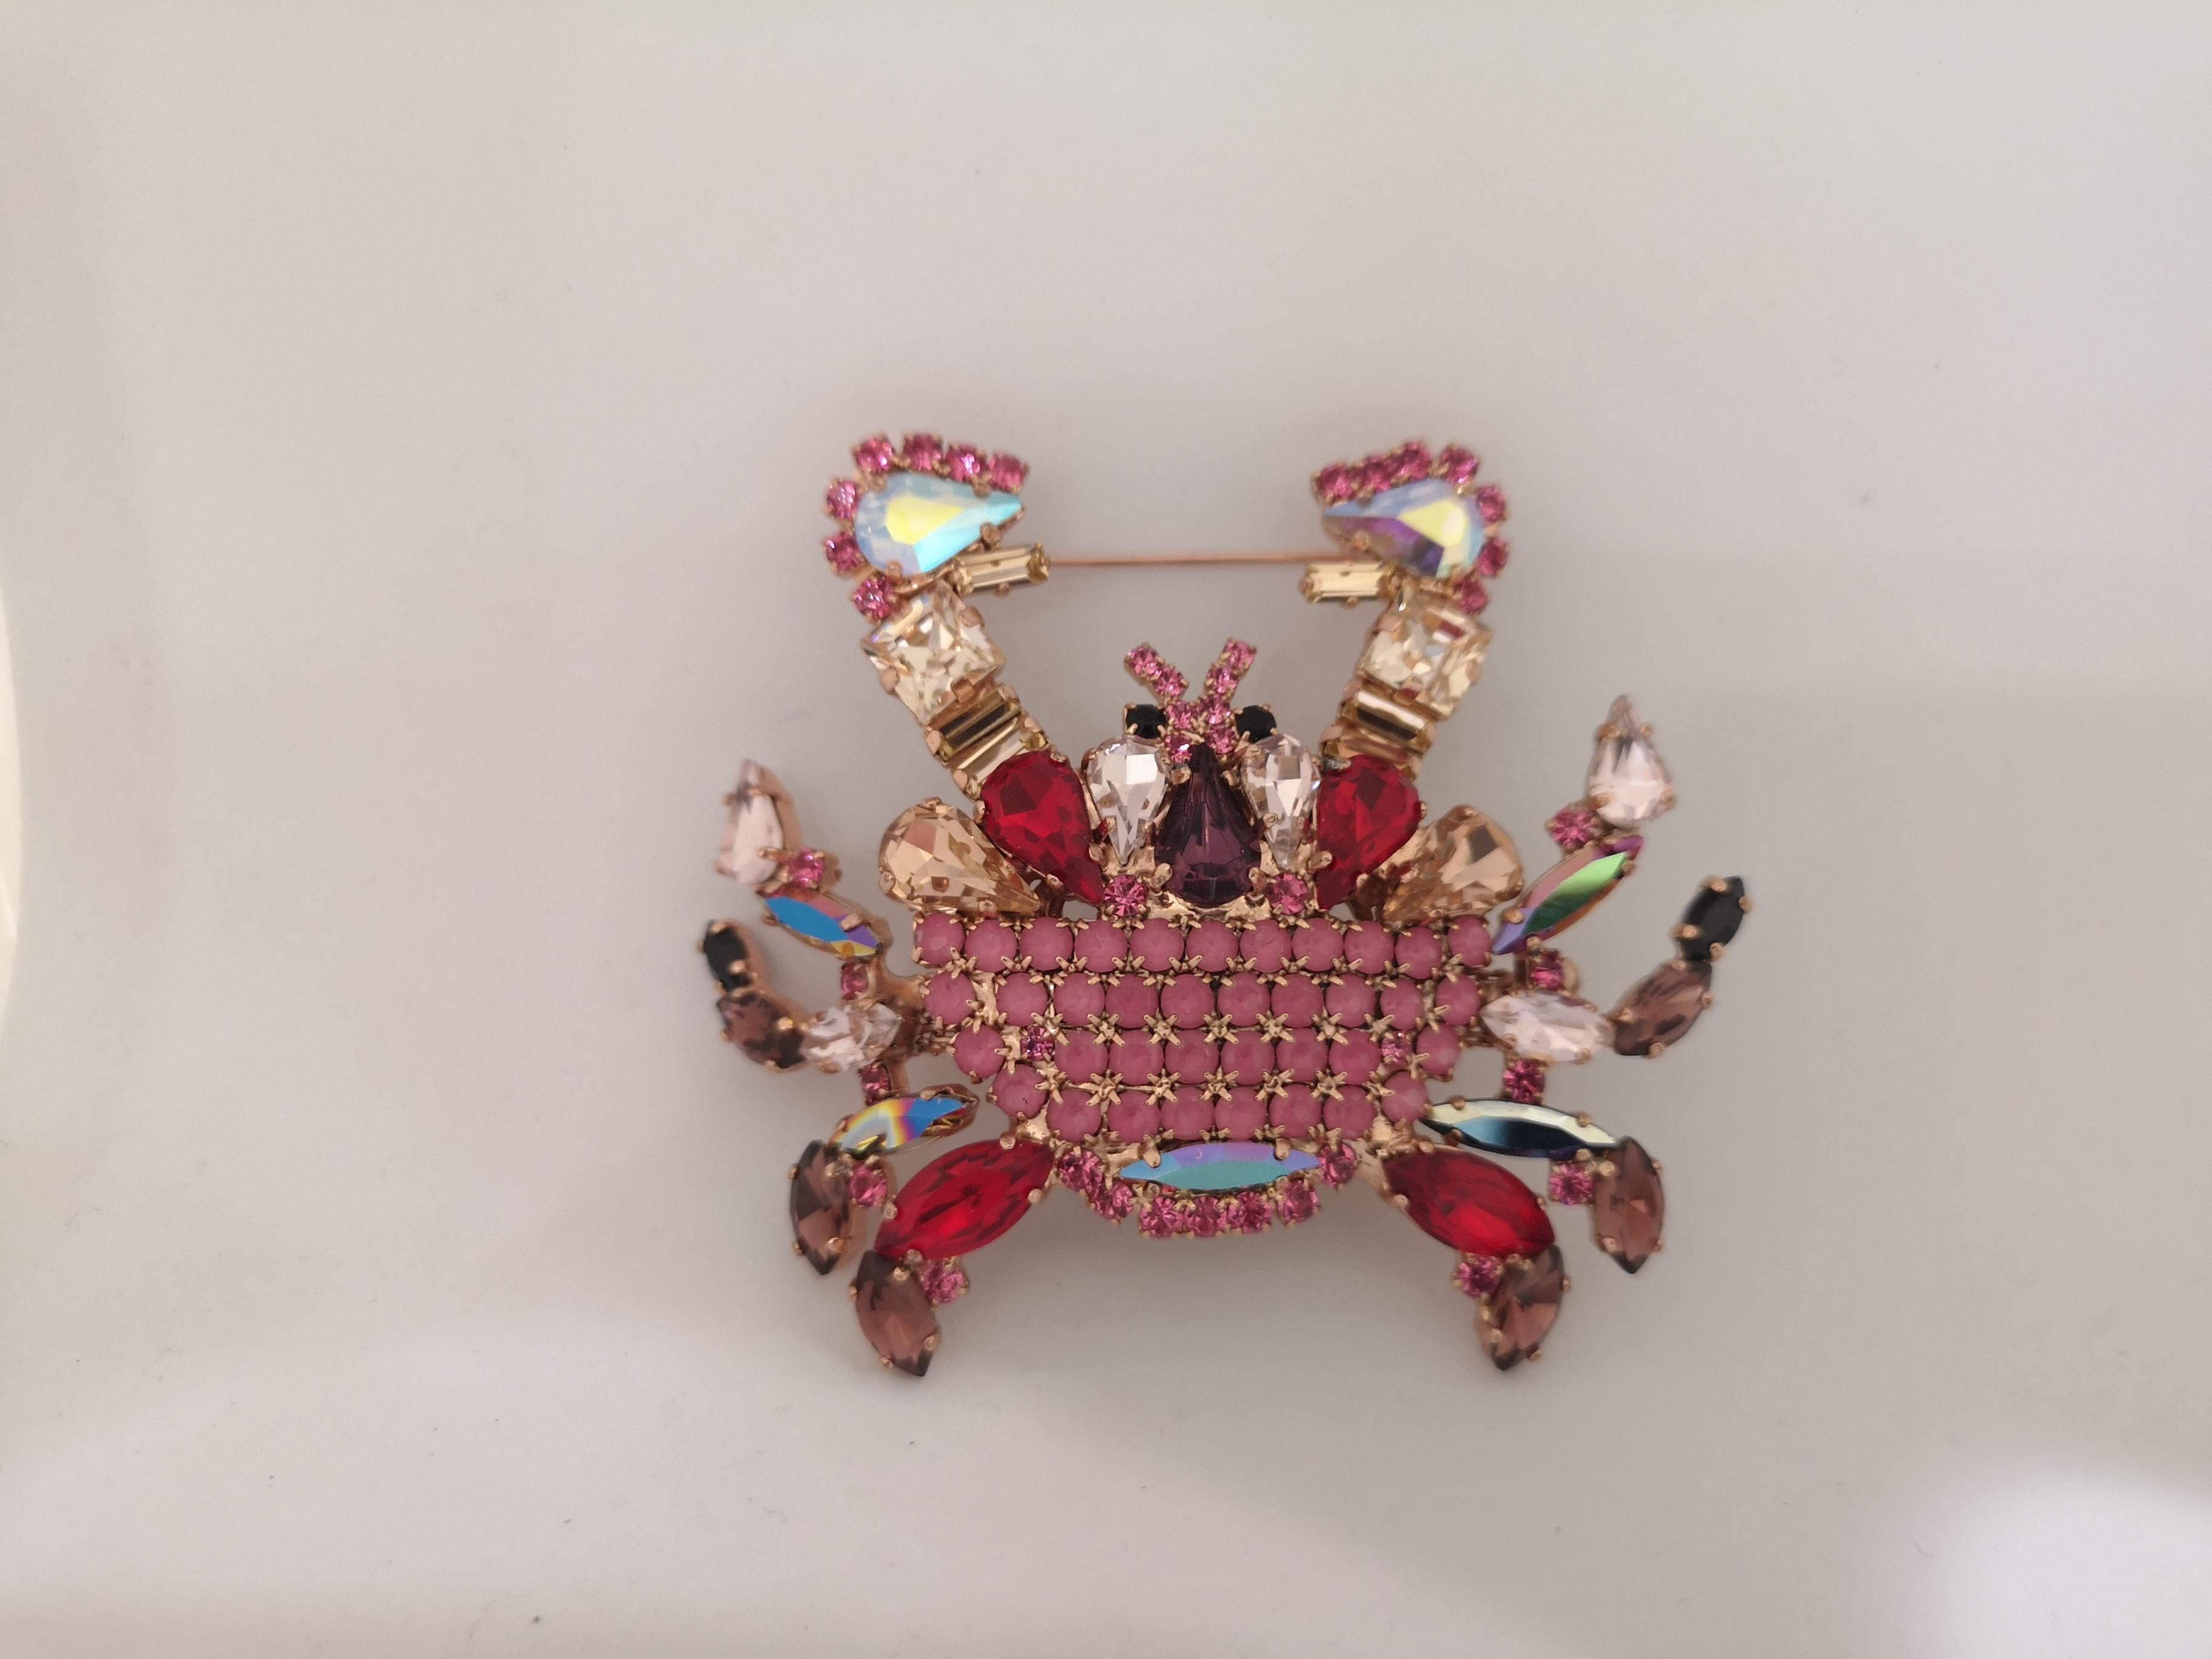 LisaC Swarovski stones Crab brooch
totally handmade in italy with real swarovski stones
measurements: 8 * 7 cm